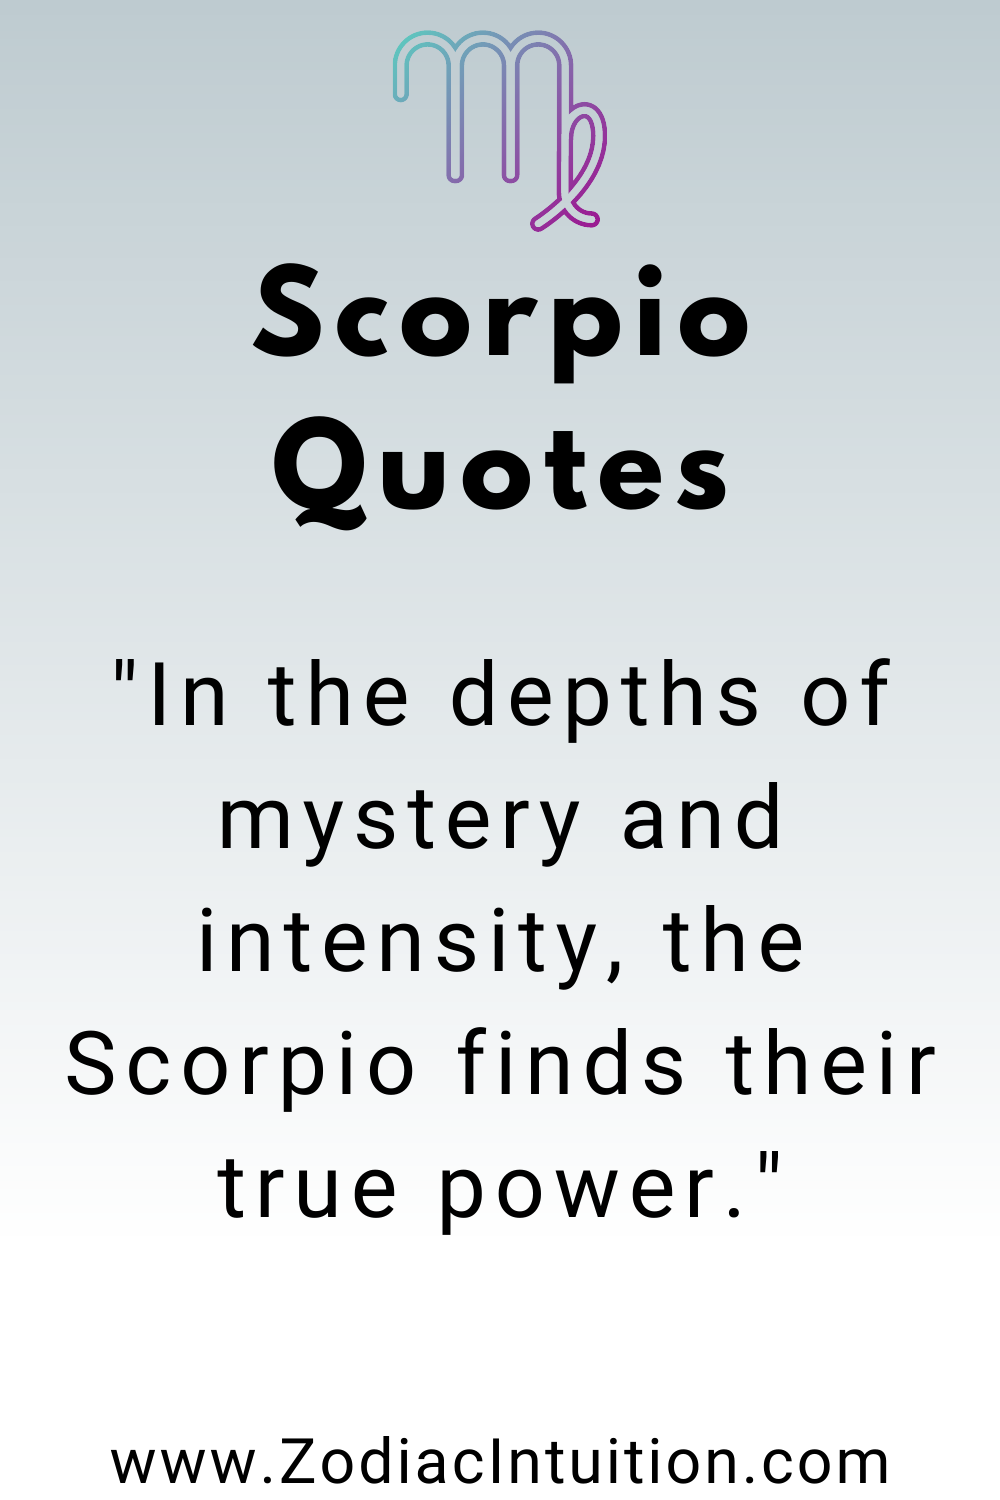 Top 5 Scorpio Quotes And Inspiration